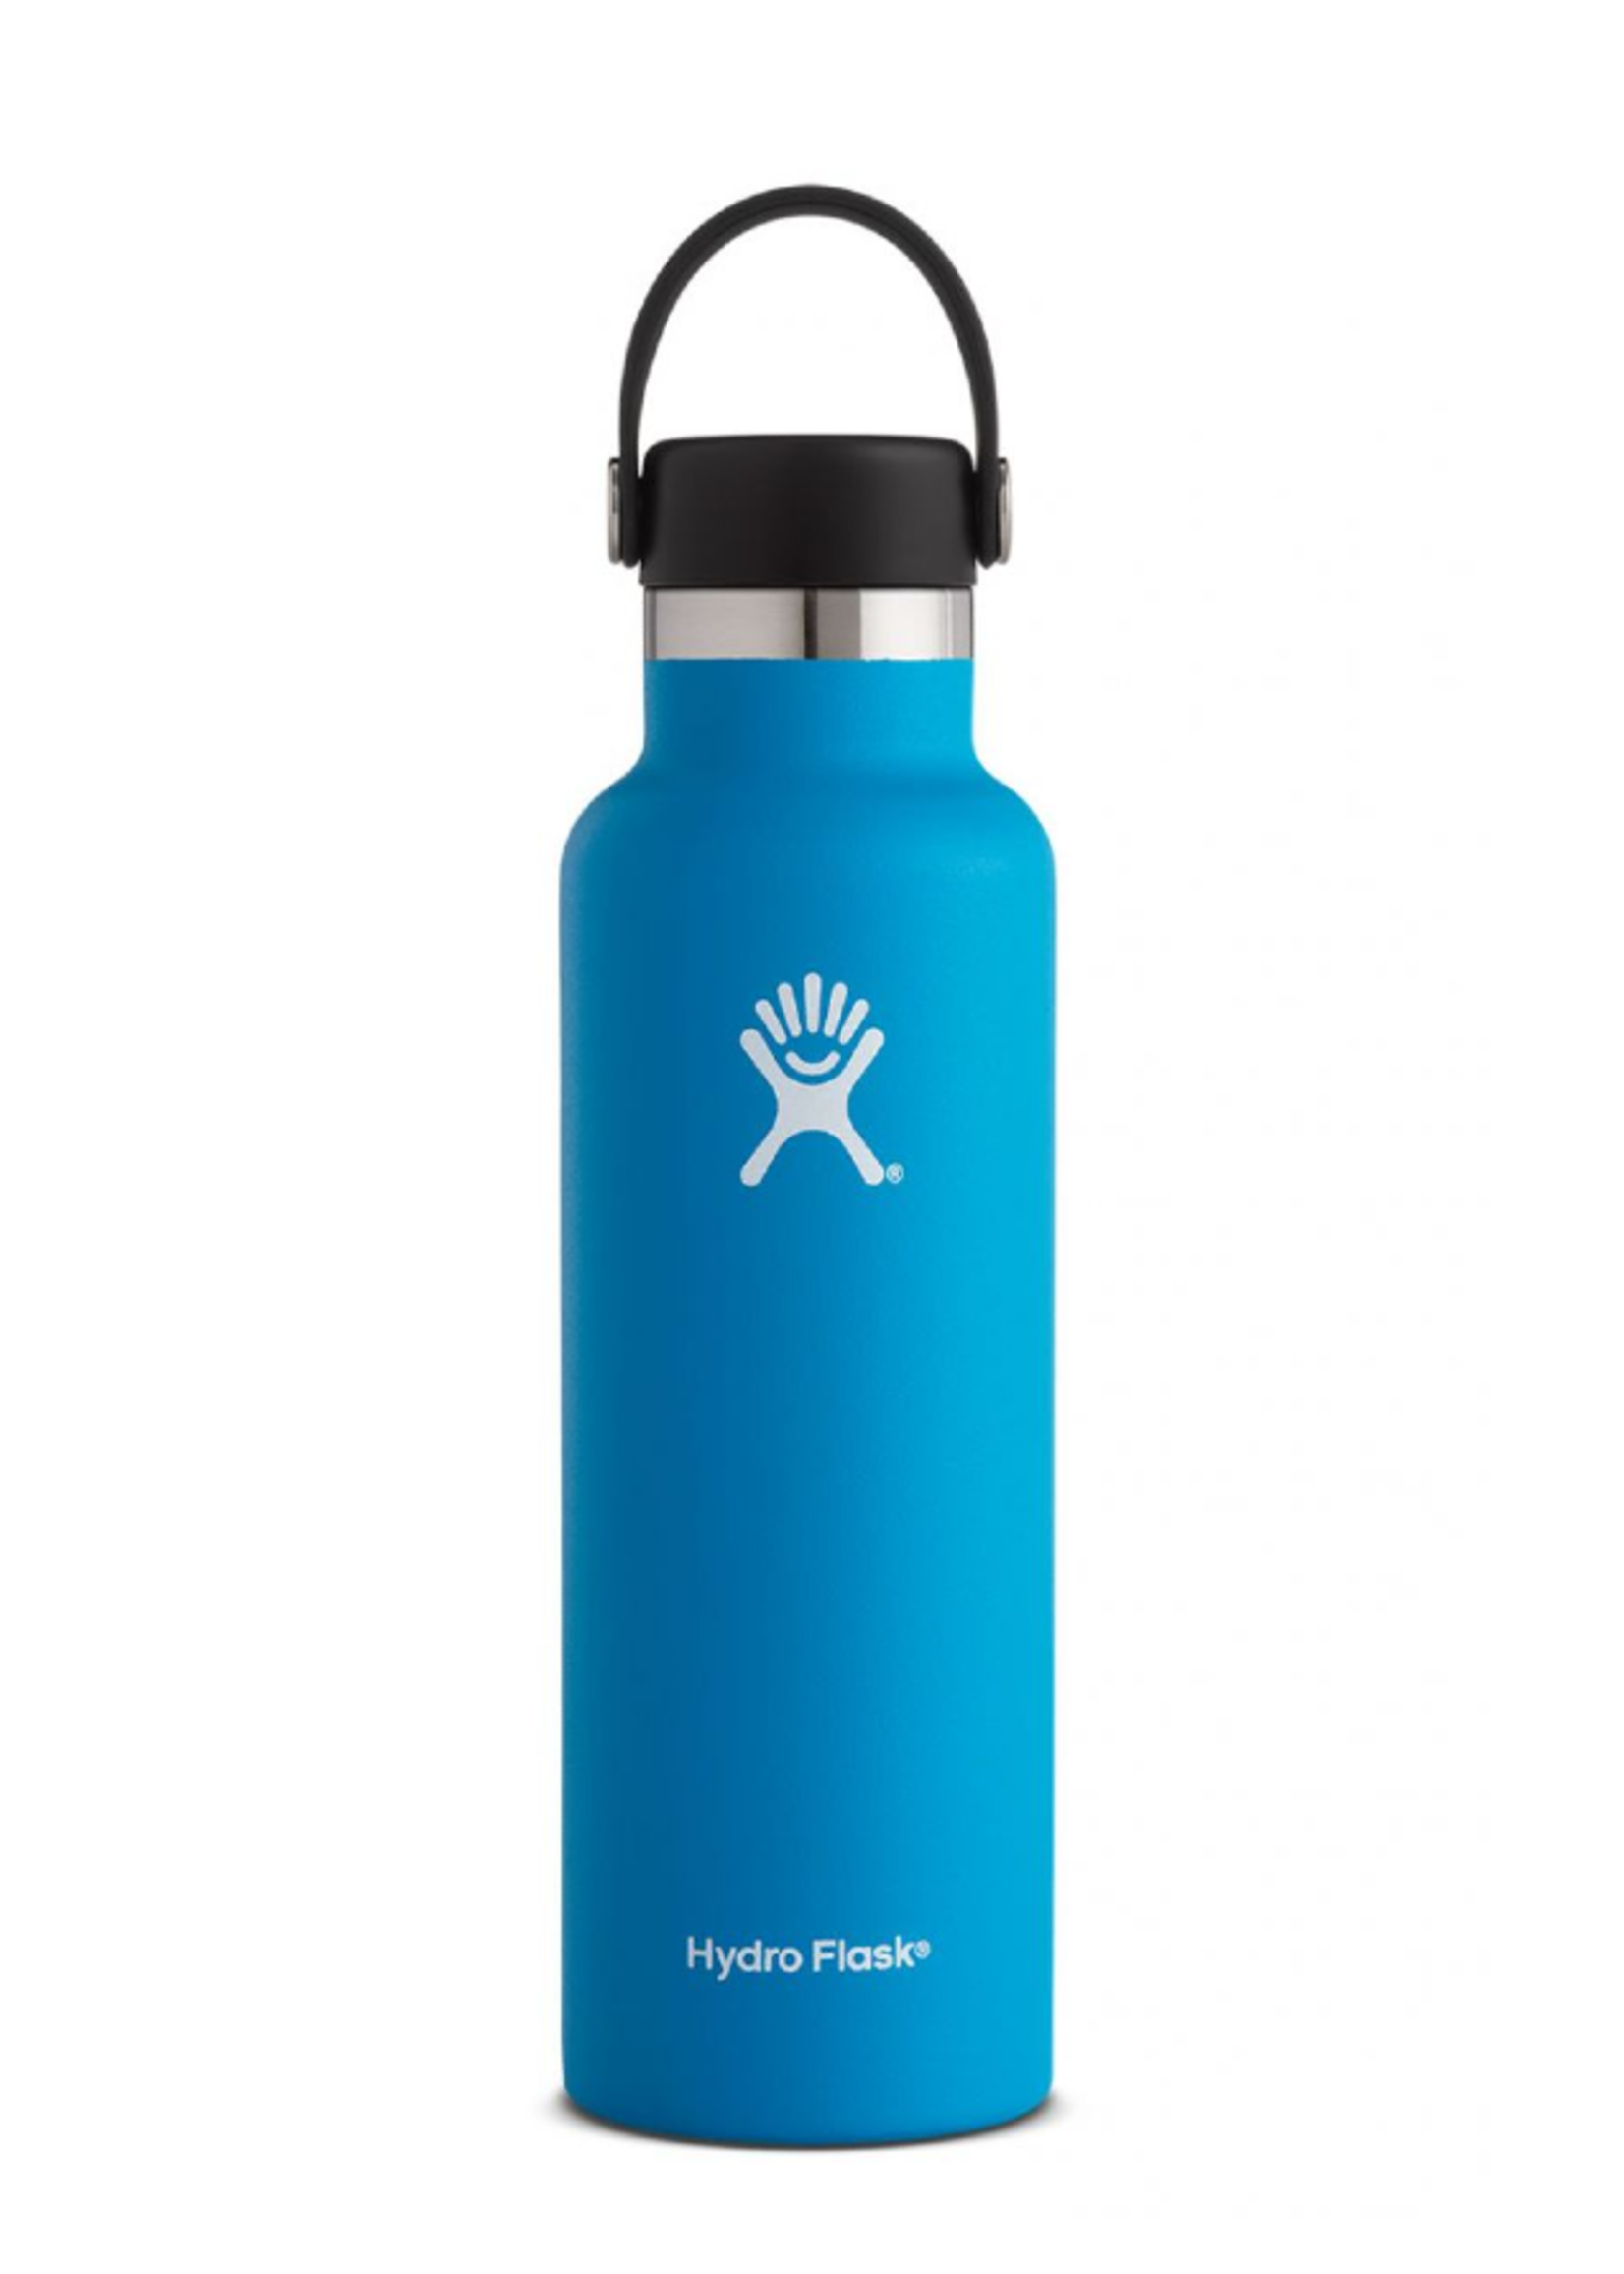 HydroFlask Hydro Flask 21 oz Standard Mouth Water Bottle